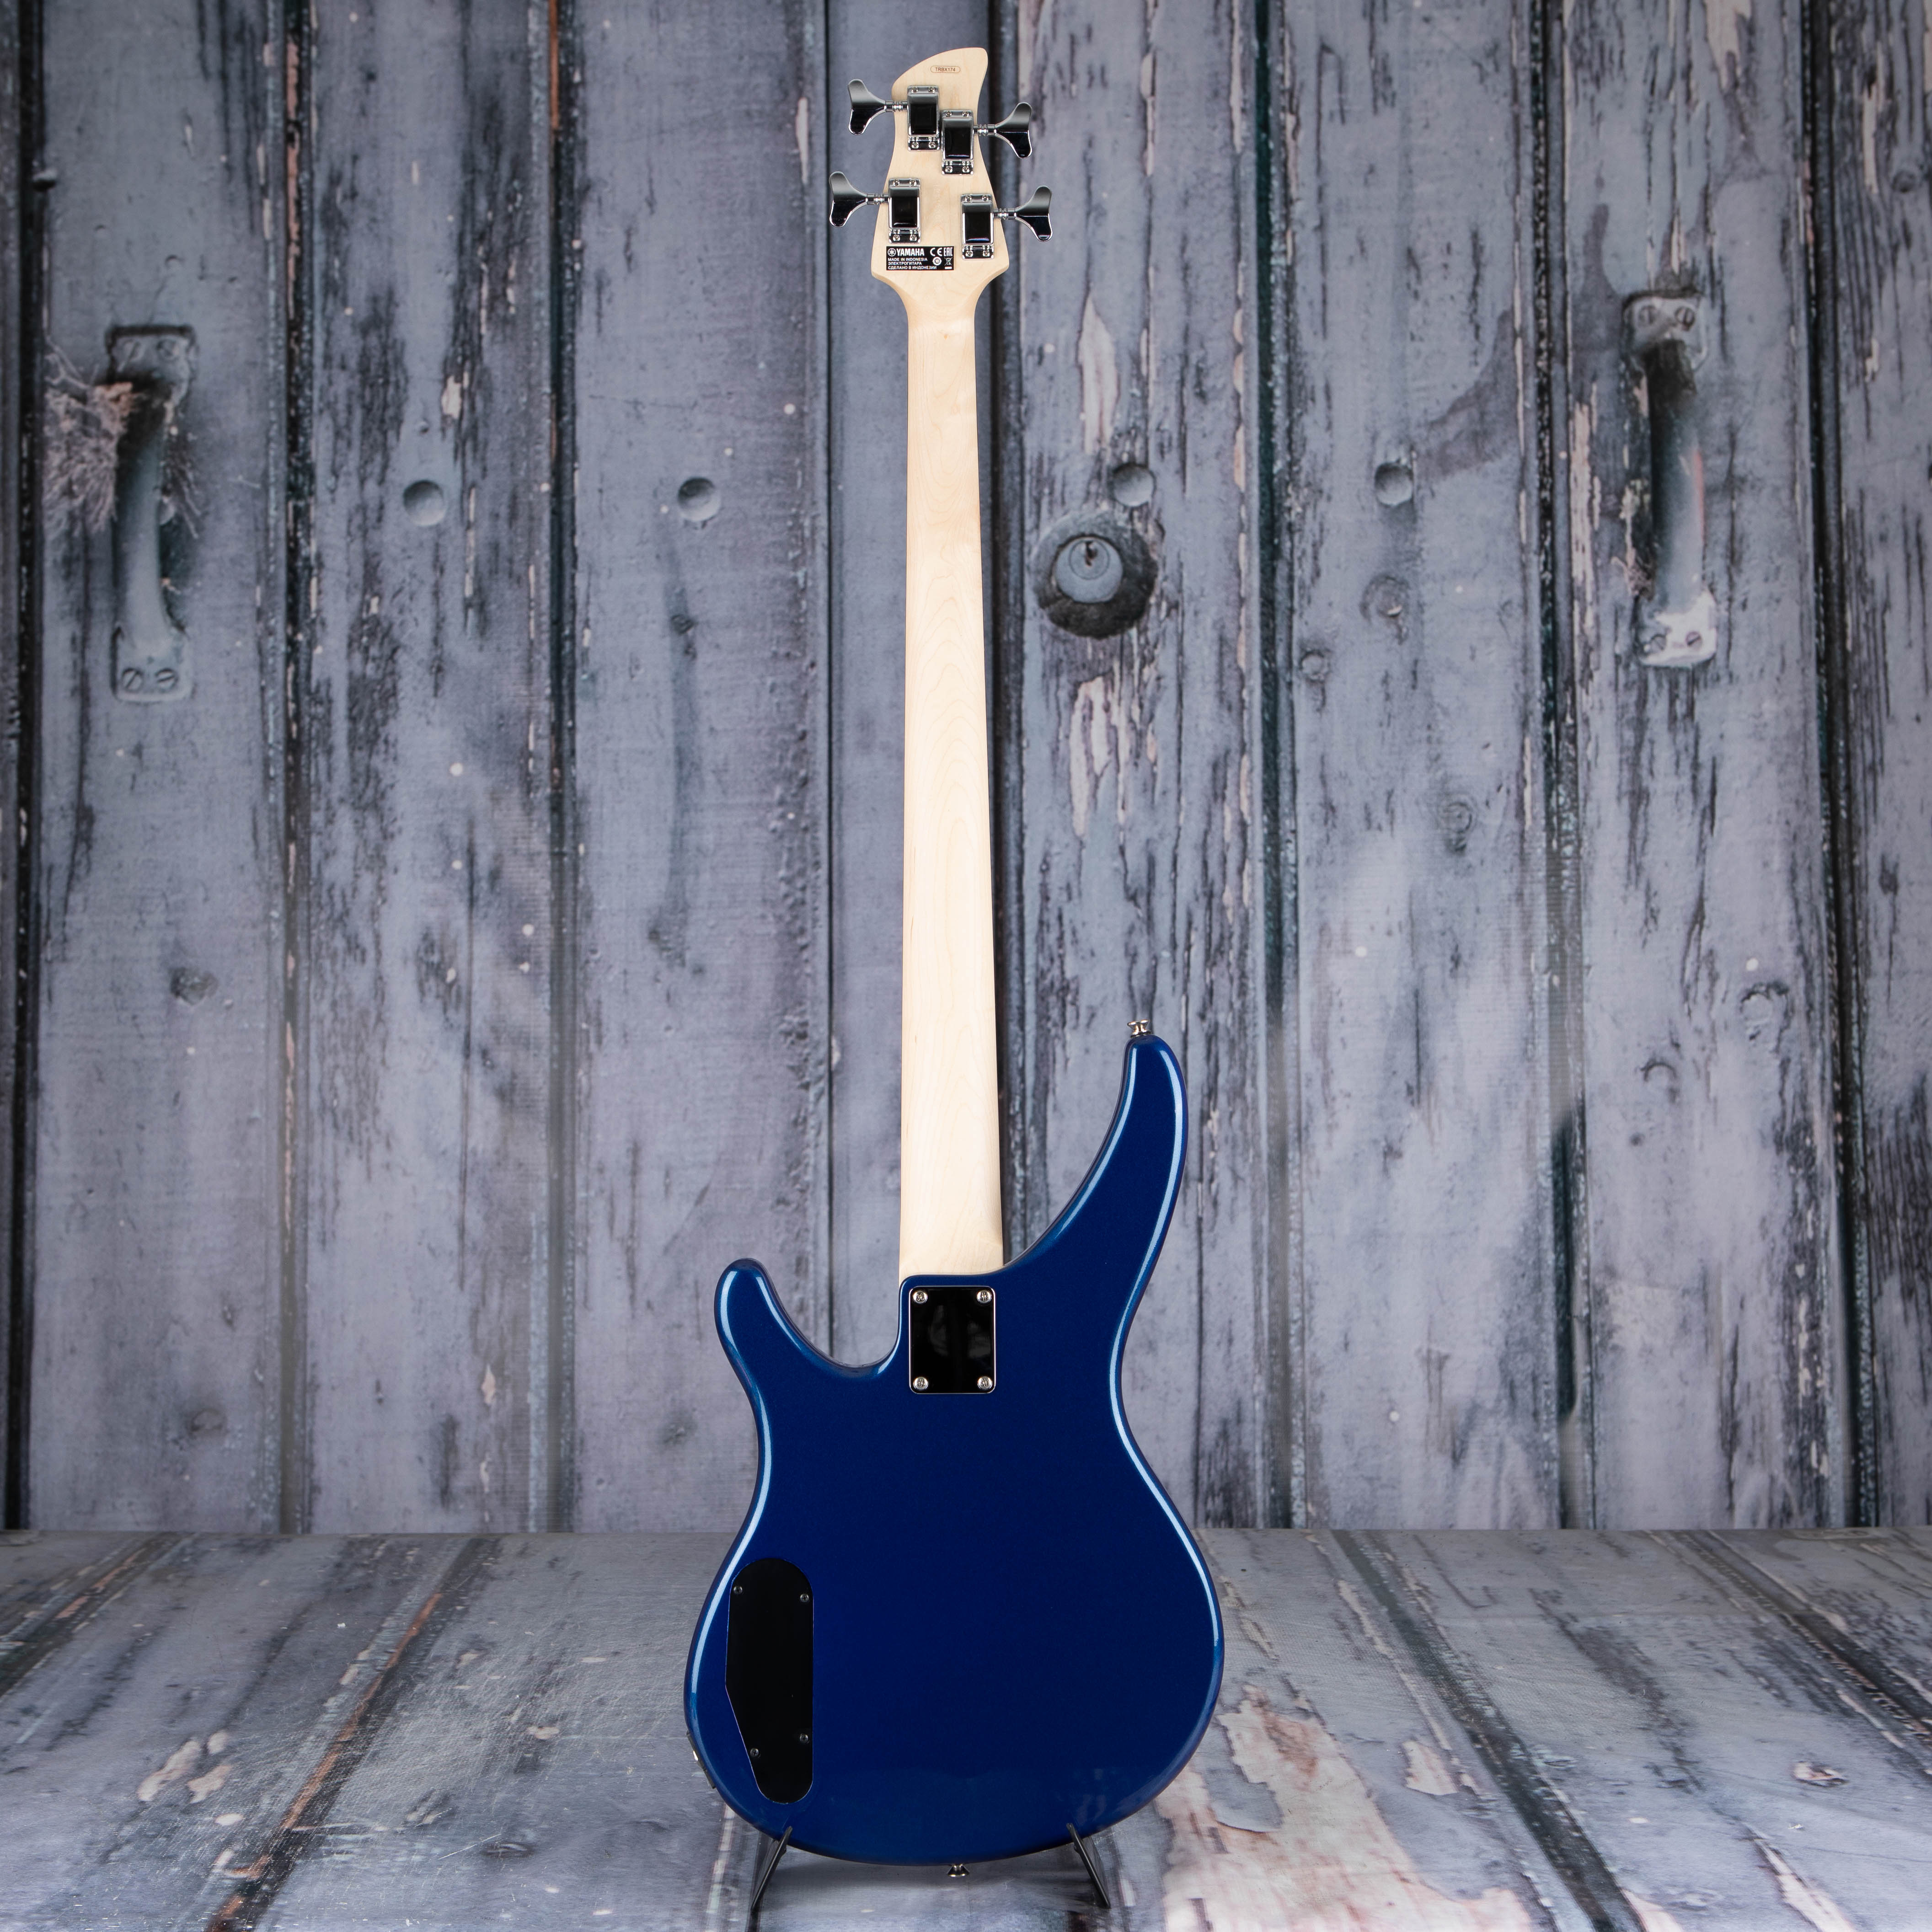 Yamaha TRBX174 Electric Bass Guitar, Metallic Blue, back